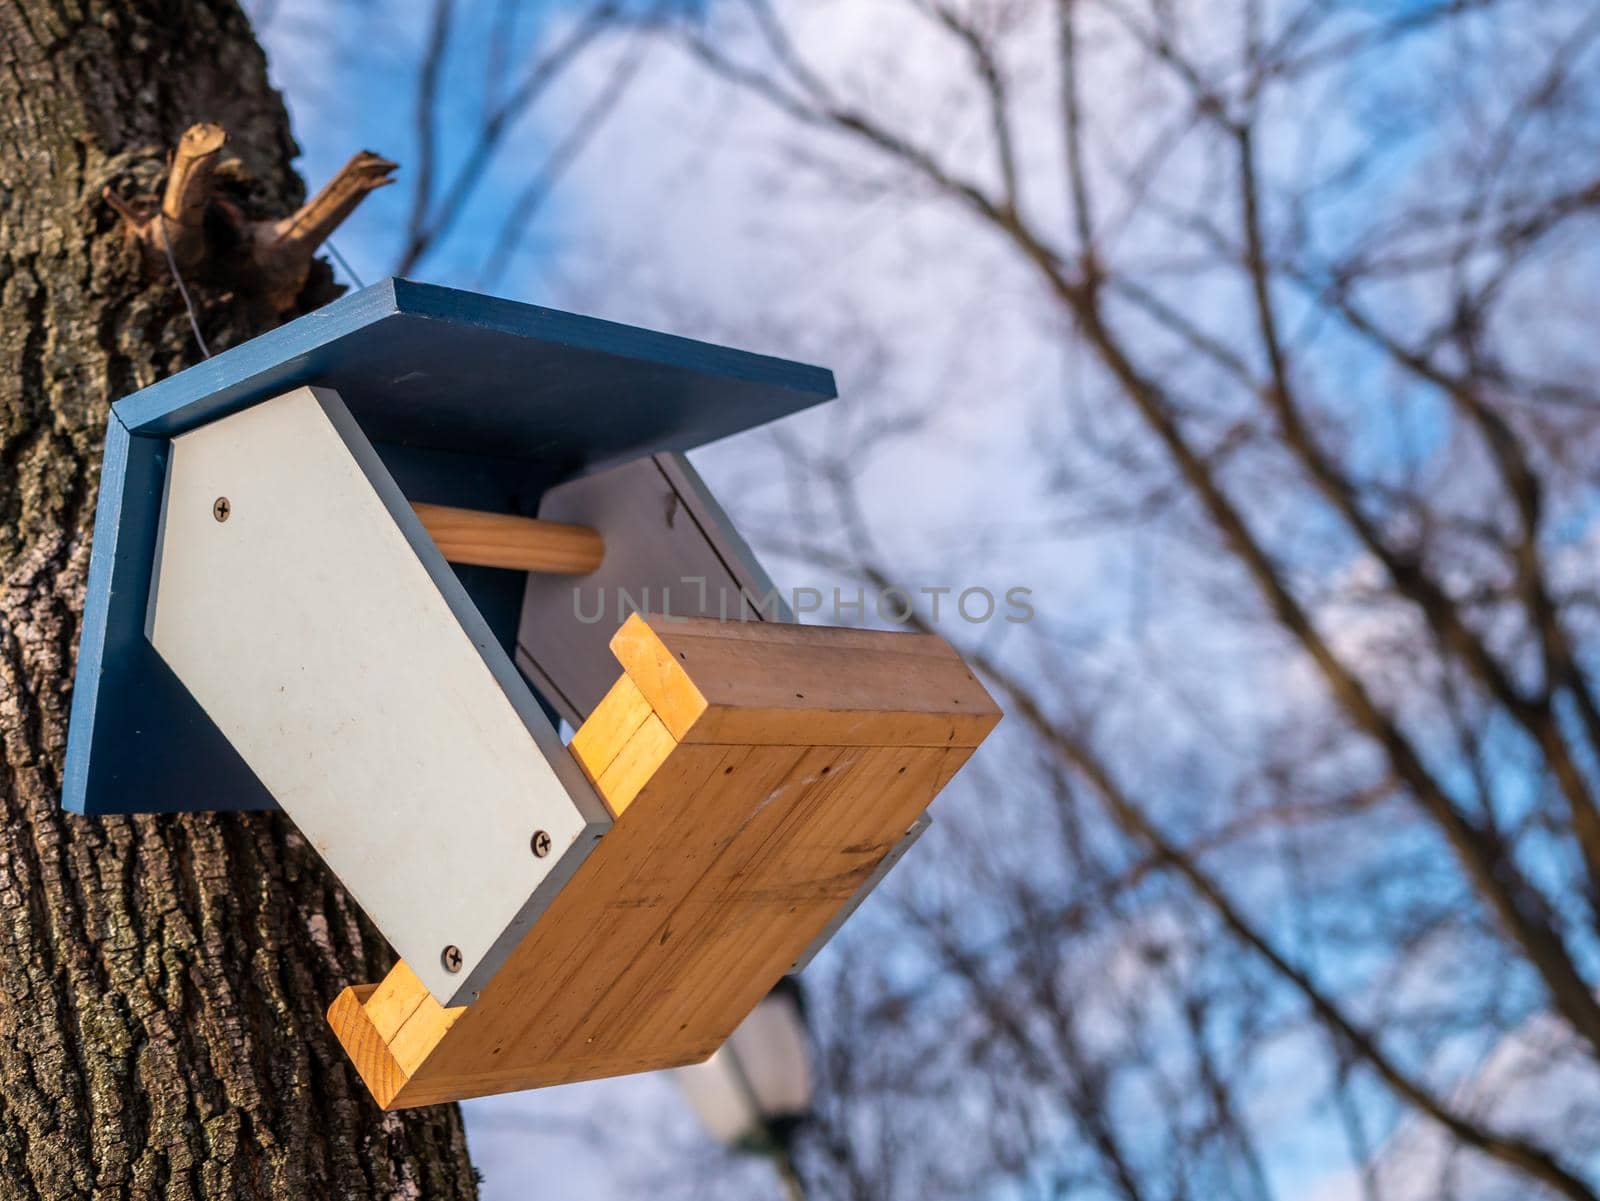 homemade bird feed in winter city park